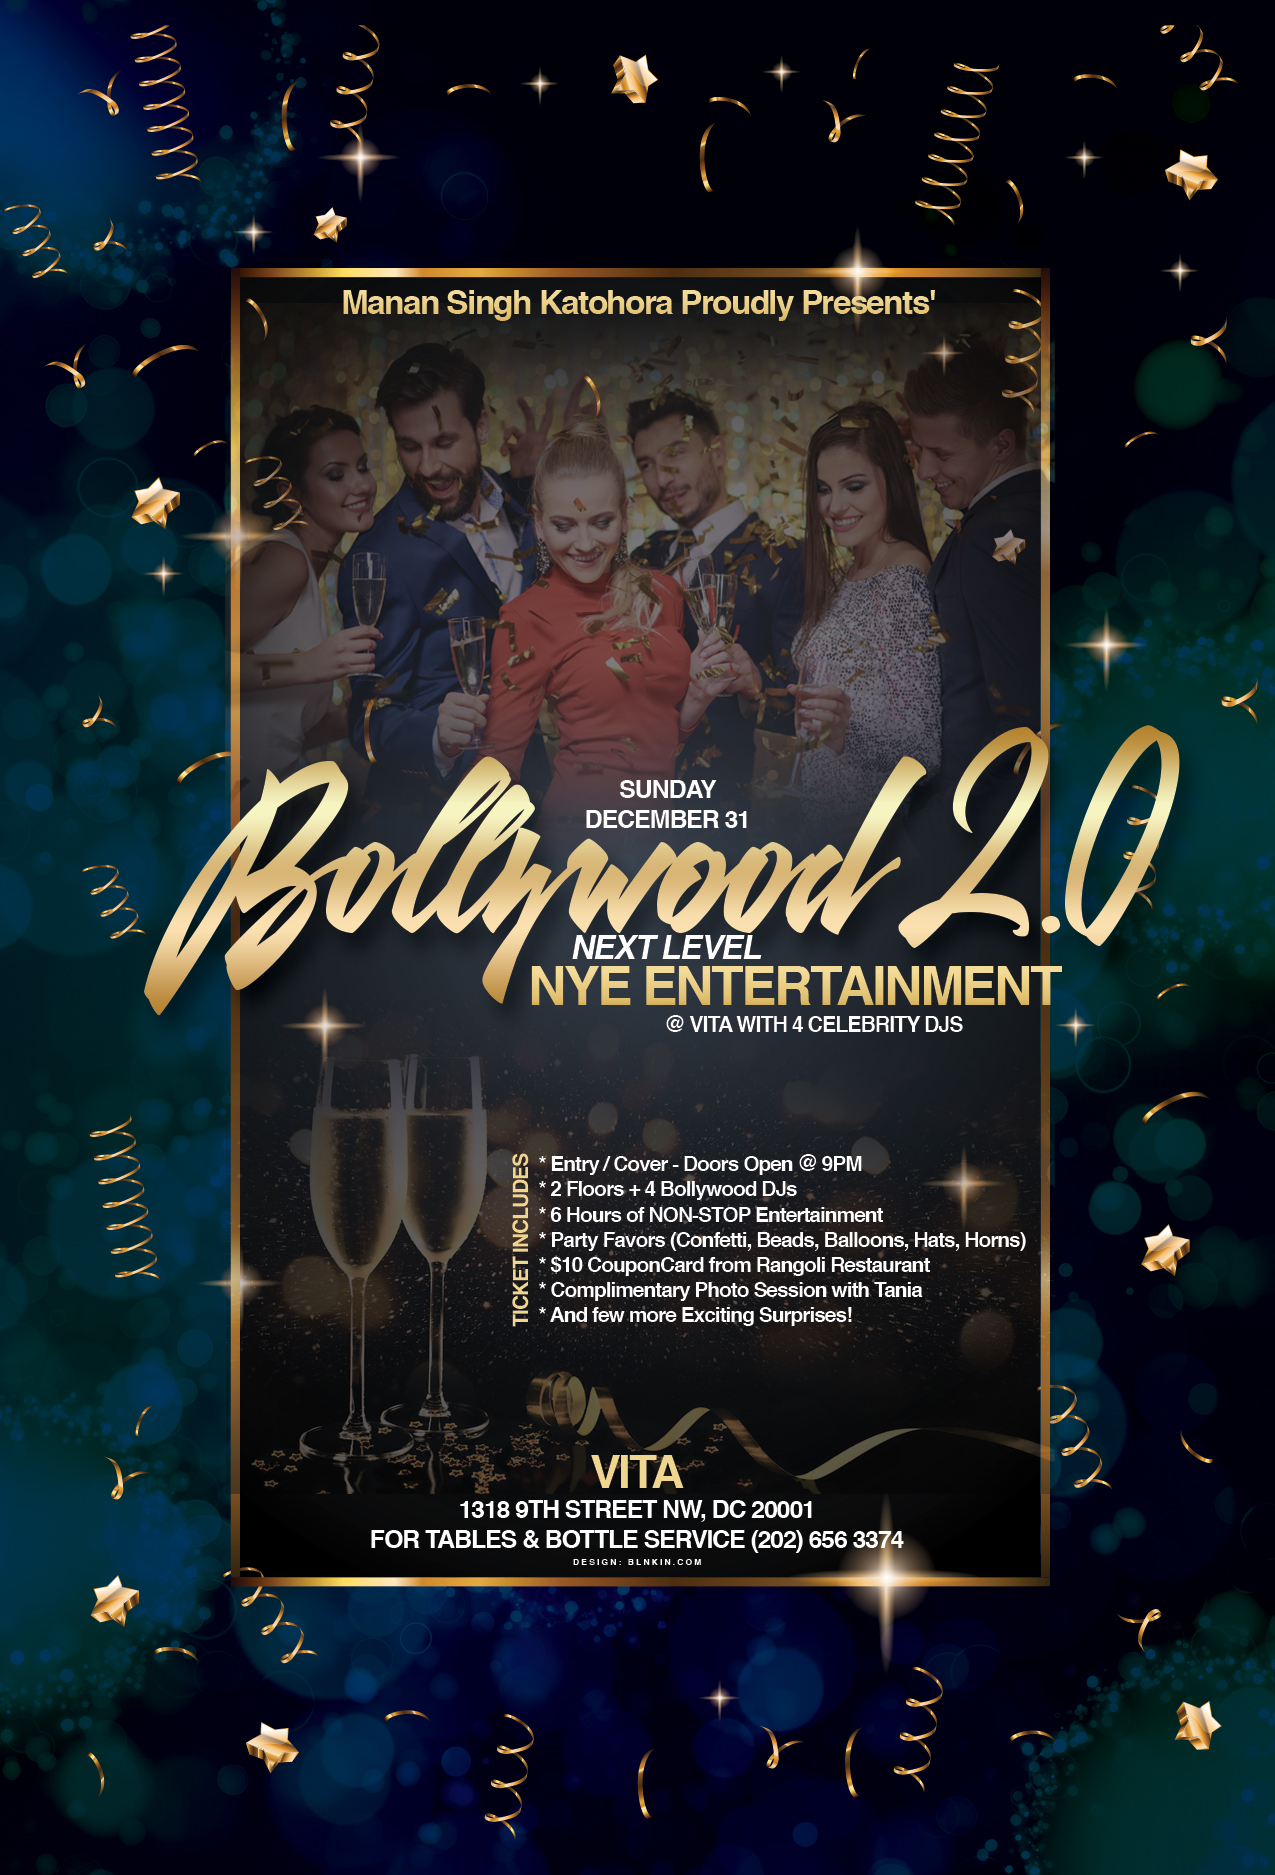 BOLLYWOOD 2.0 - Next Level NYE Entertainment at VITA with 4 Celebrity DJs